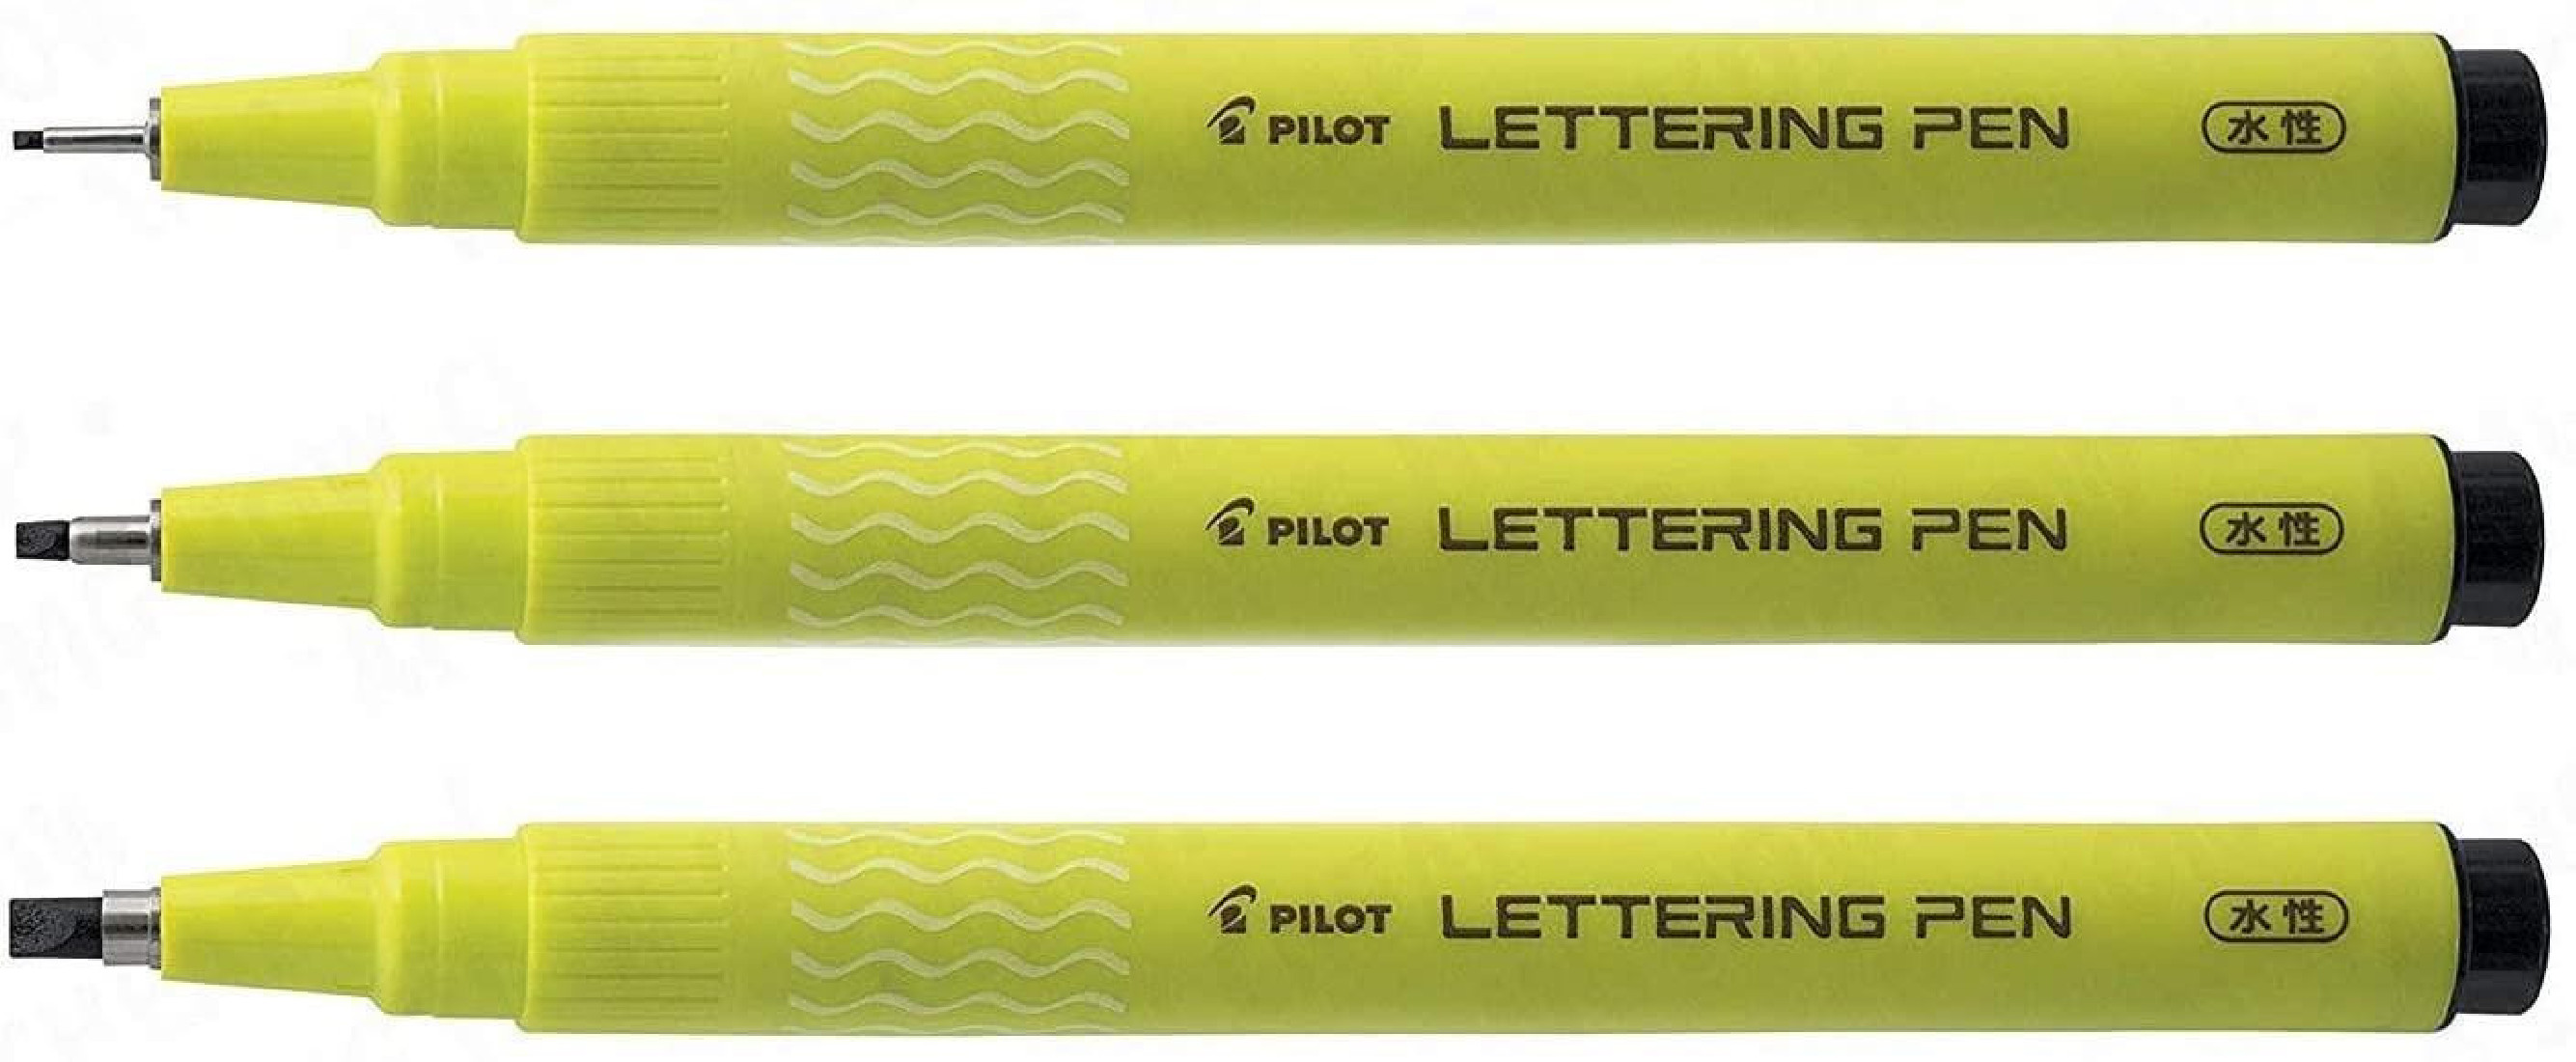 Pilot Lettering Fineliner Pen Black